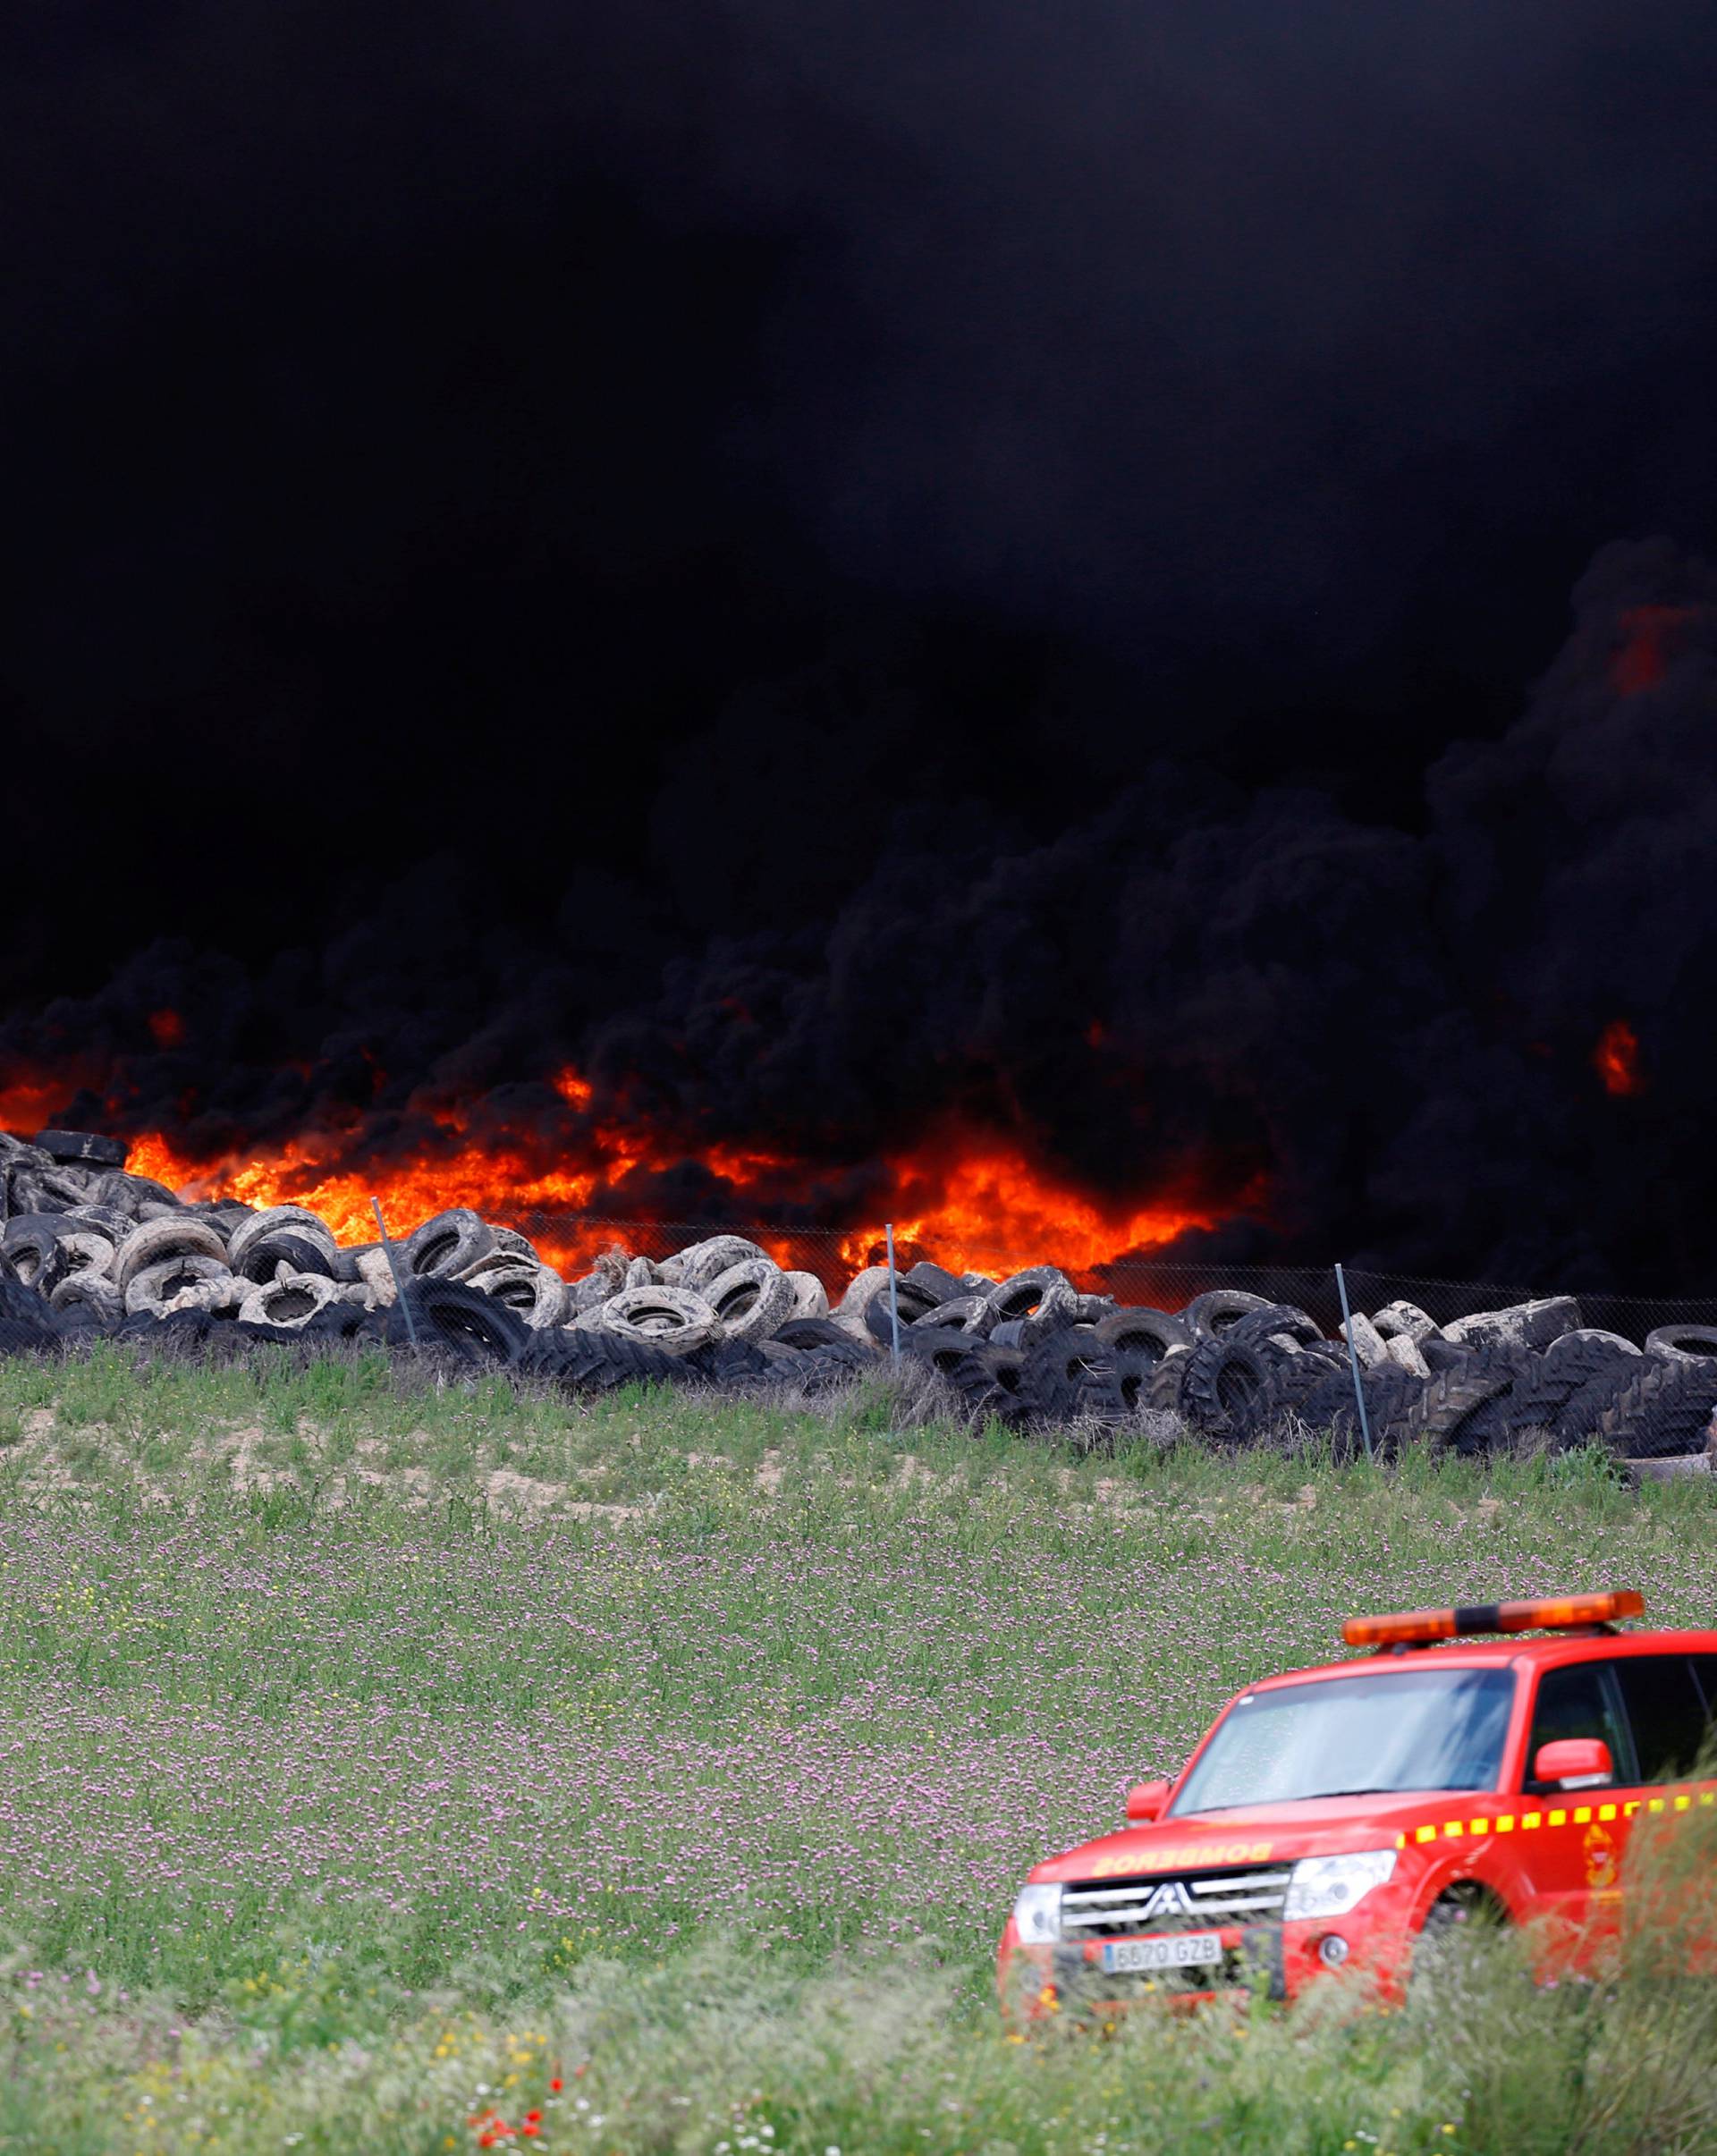 An emergency car stands near a fire at a tire dump near a residential development in Sesena